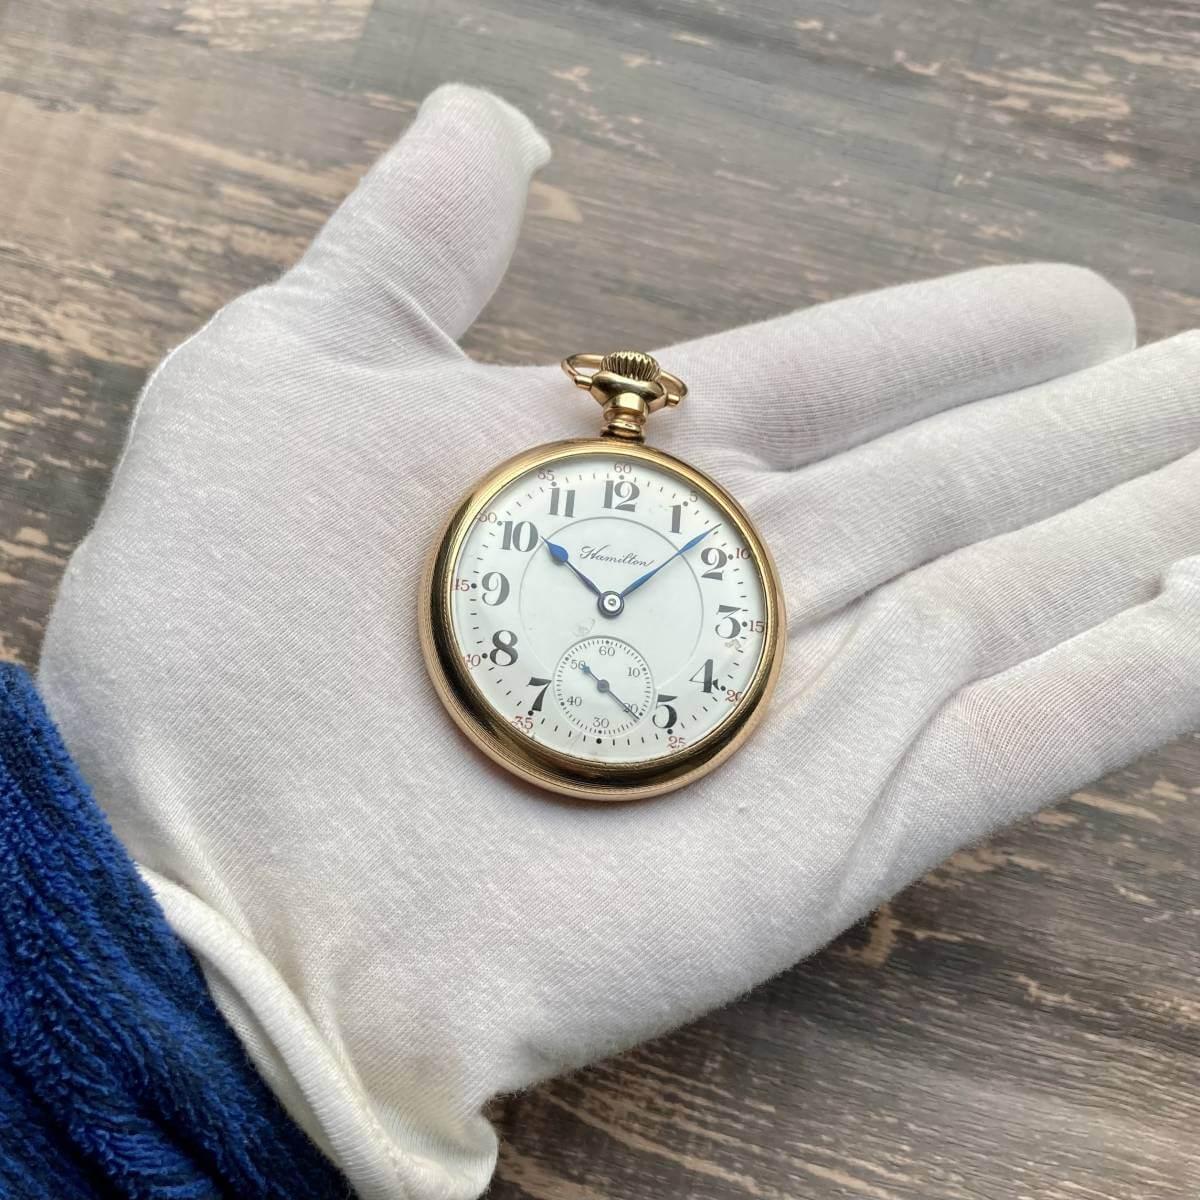 Hamilton antique pocket watch manual winding open face gold case diameter 47 mm vintage pocket watch - Murphy Johnson Watches Co.